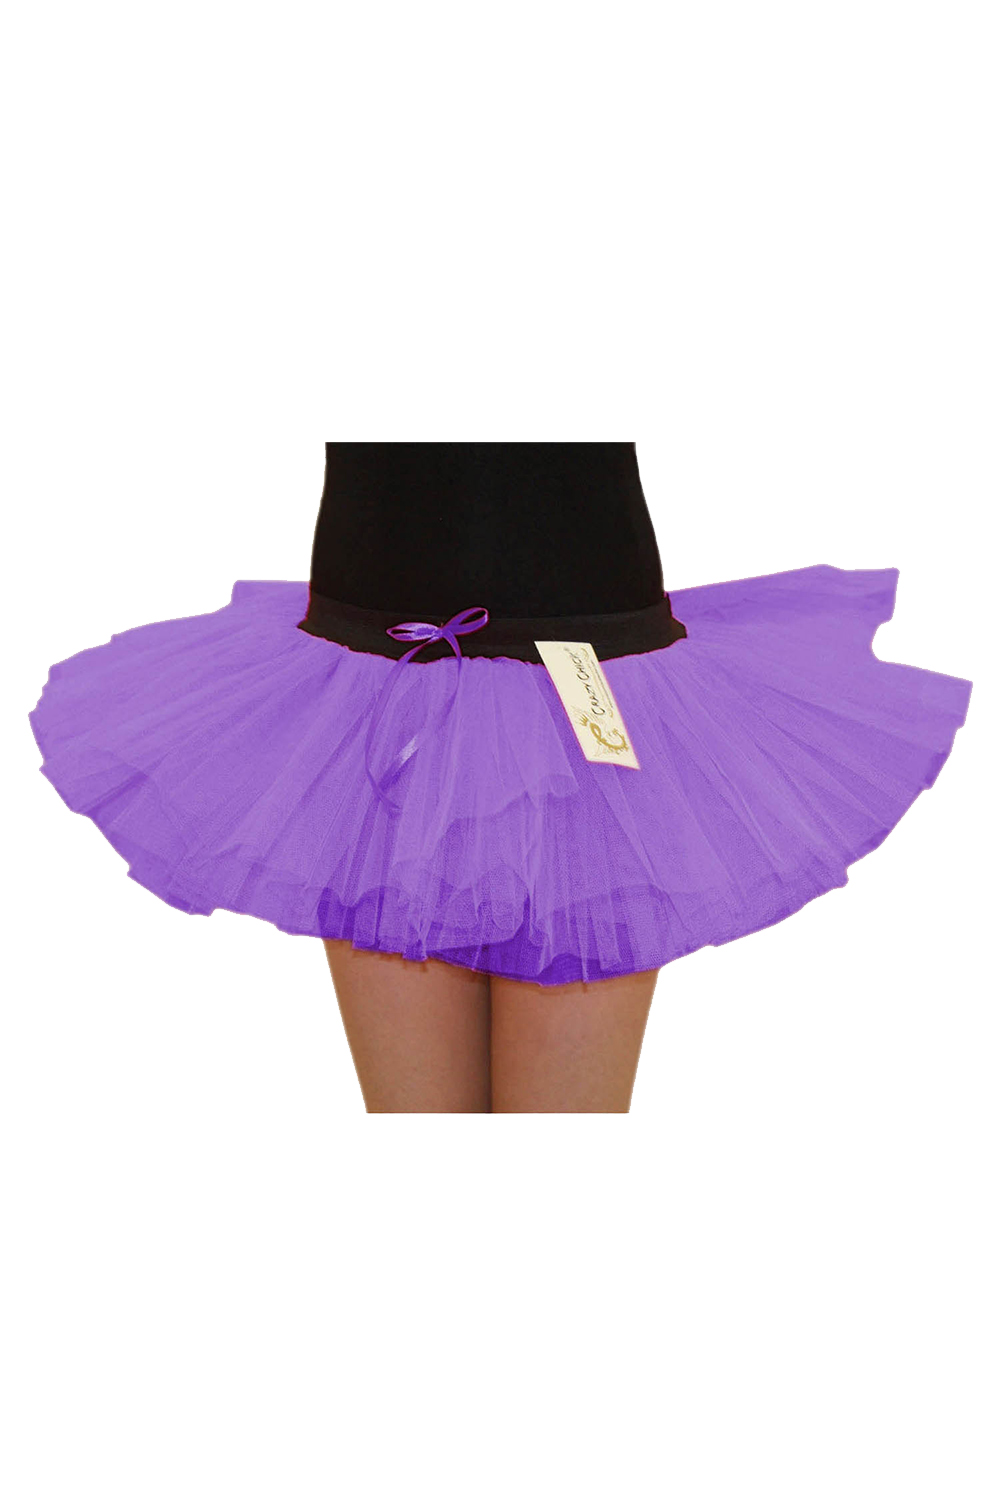 Crazy Chick Girls 3 Layers Purple Tutu Skirt